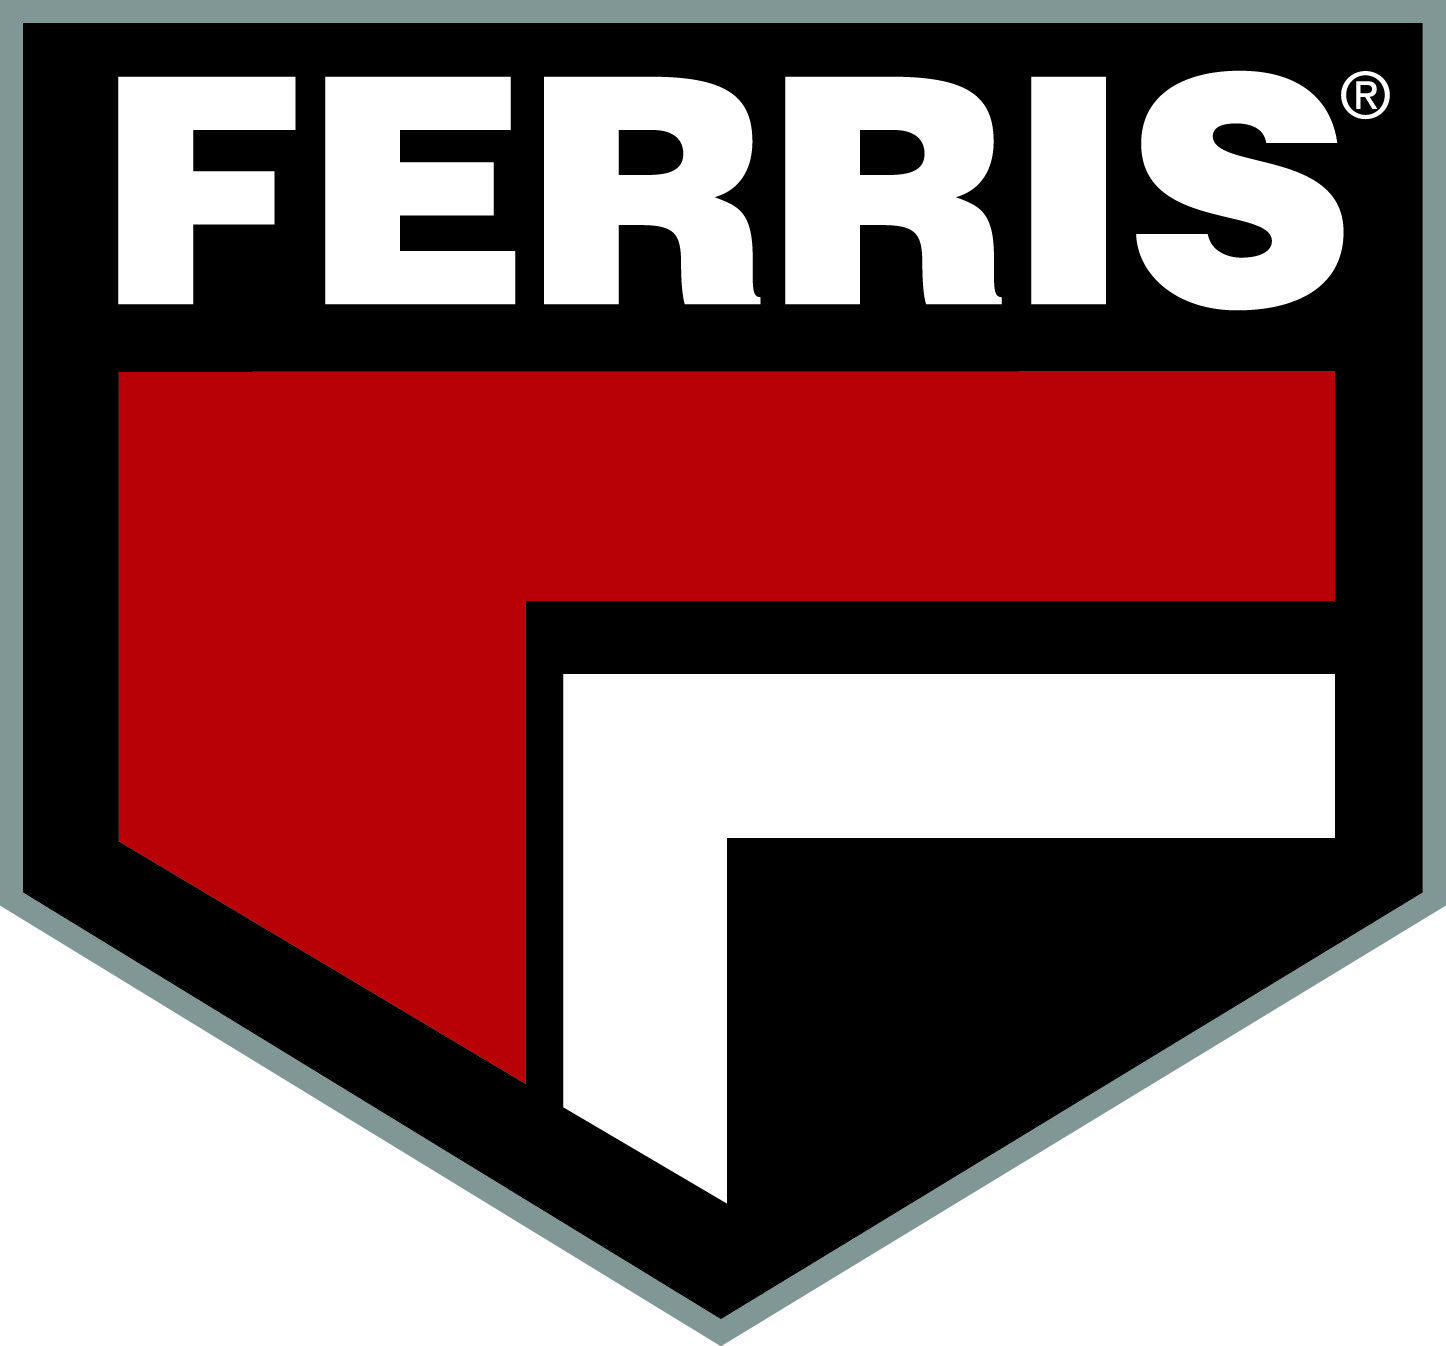 Ferris Logo - Ferris JPEG Logos